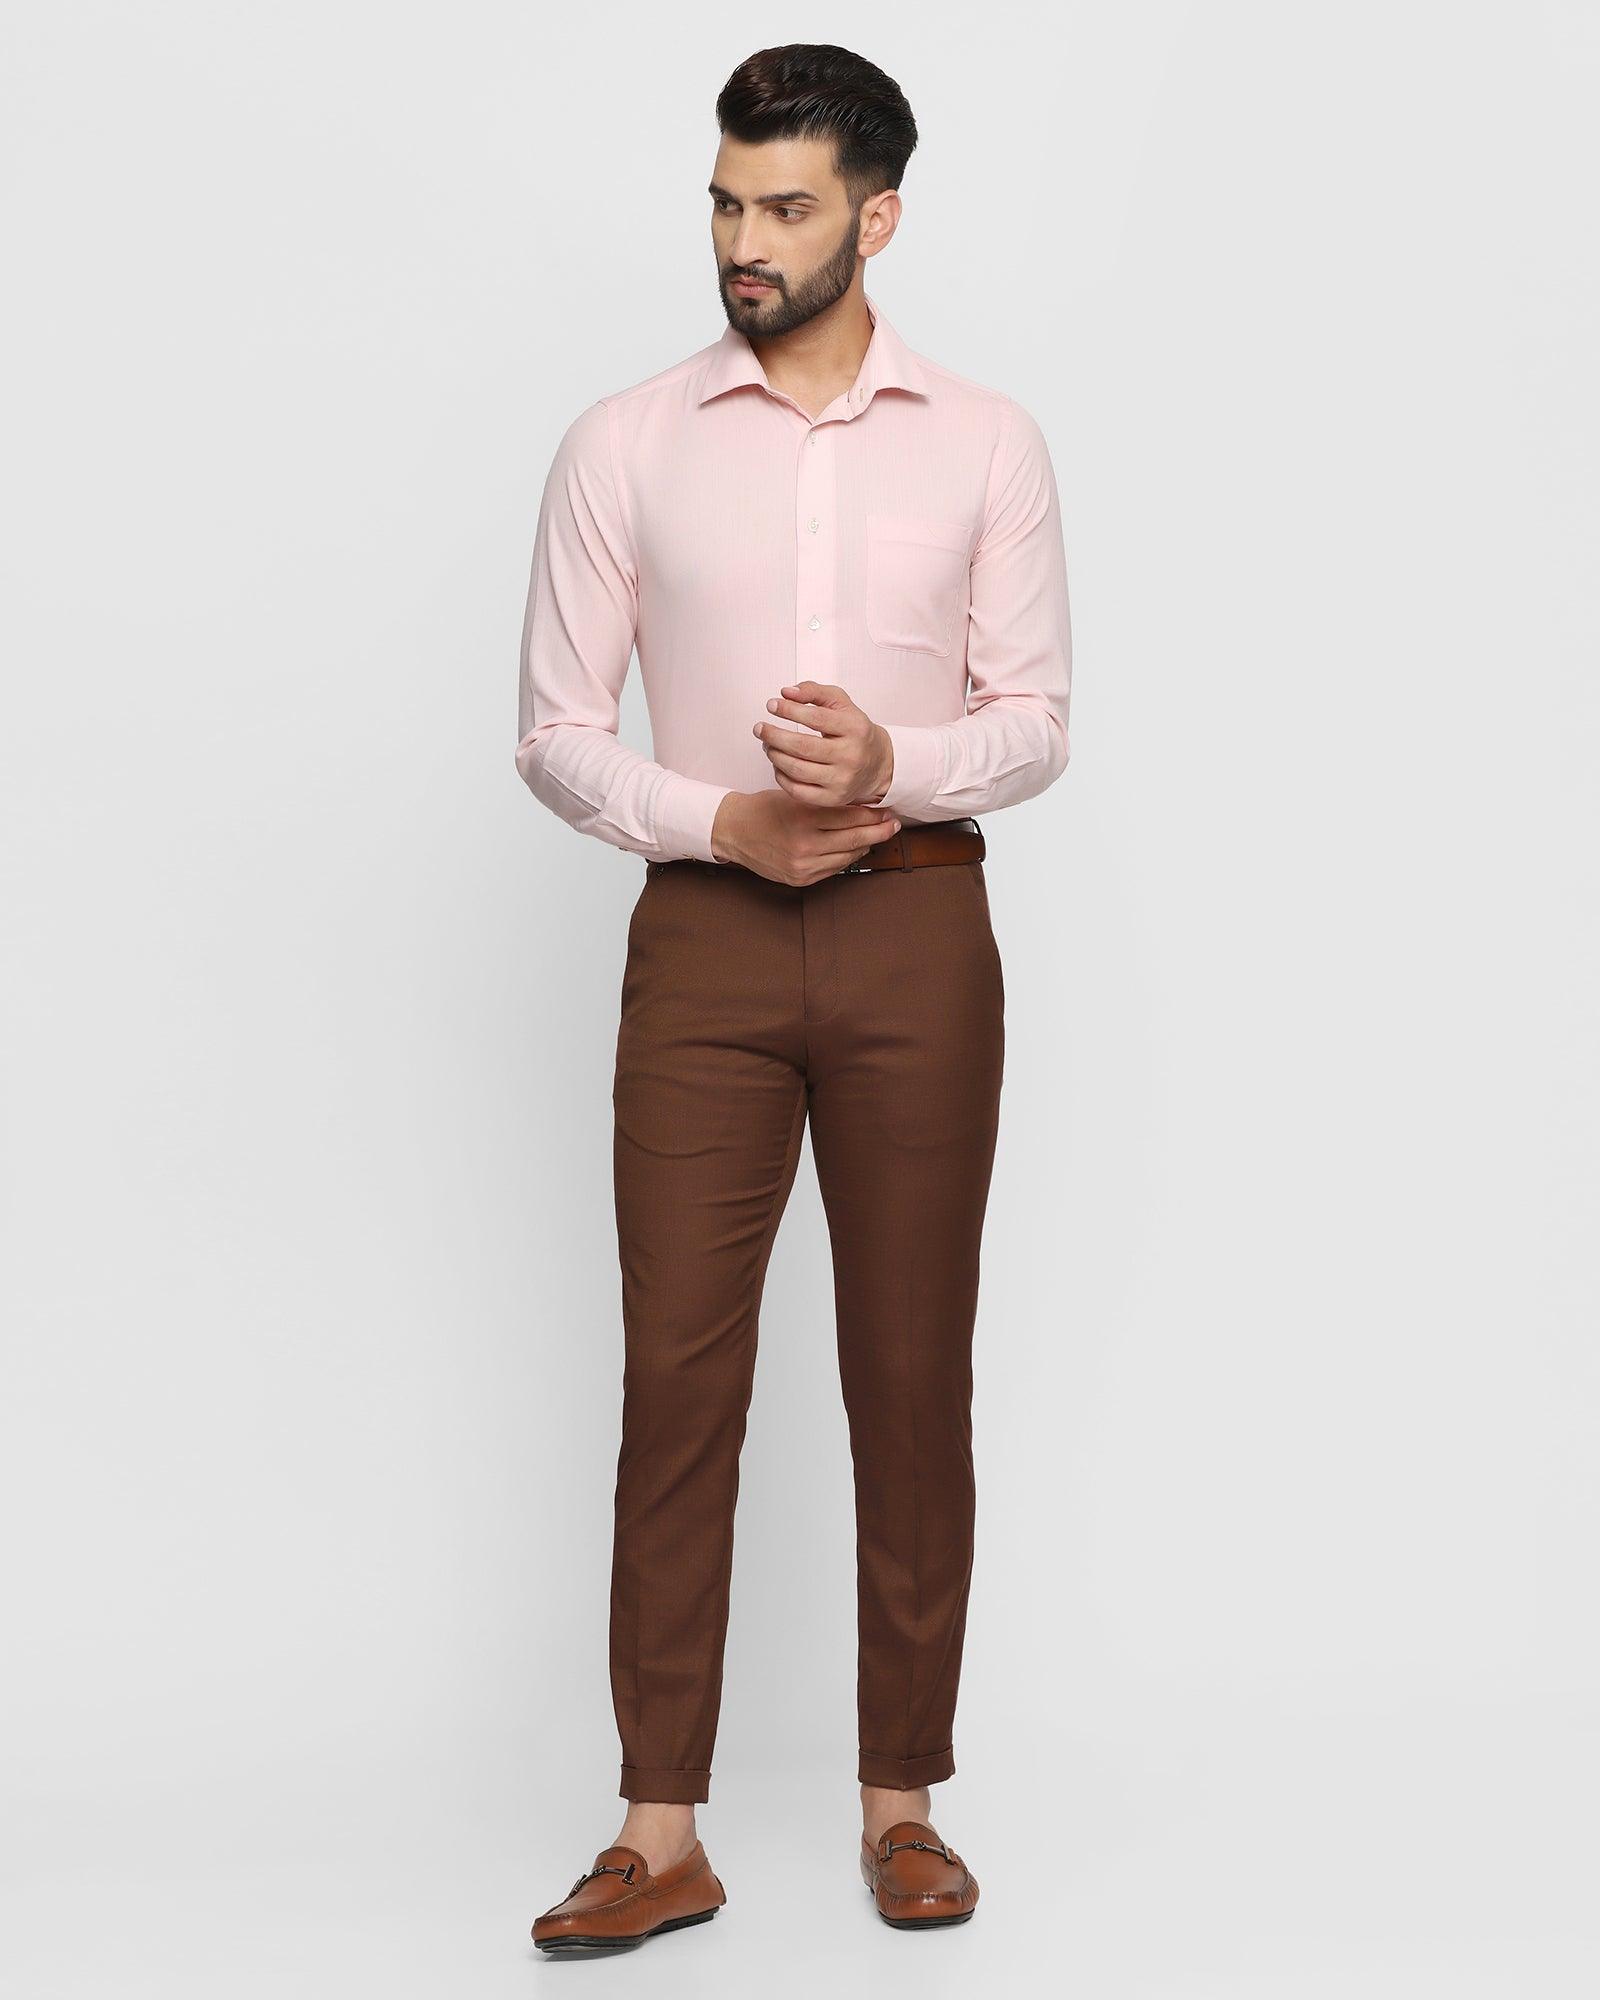 Buy Brown Trousers for Men